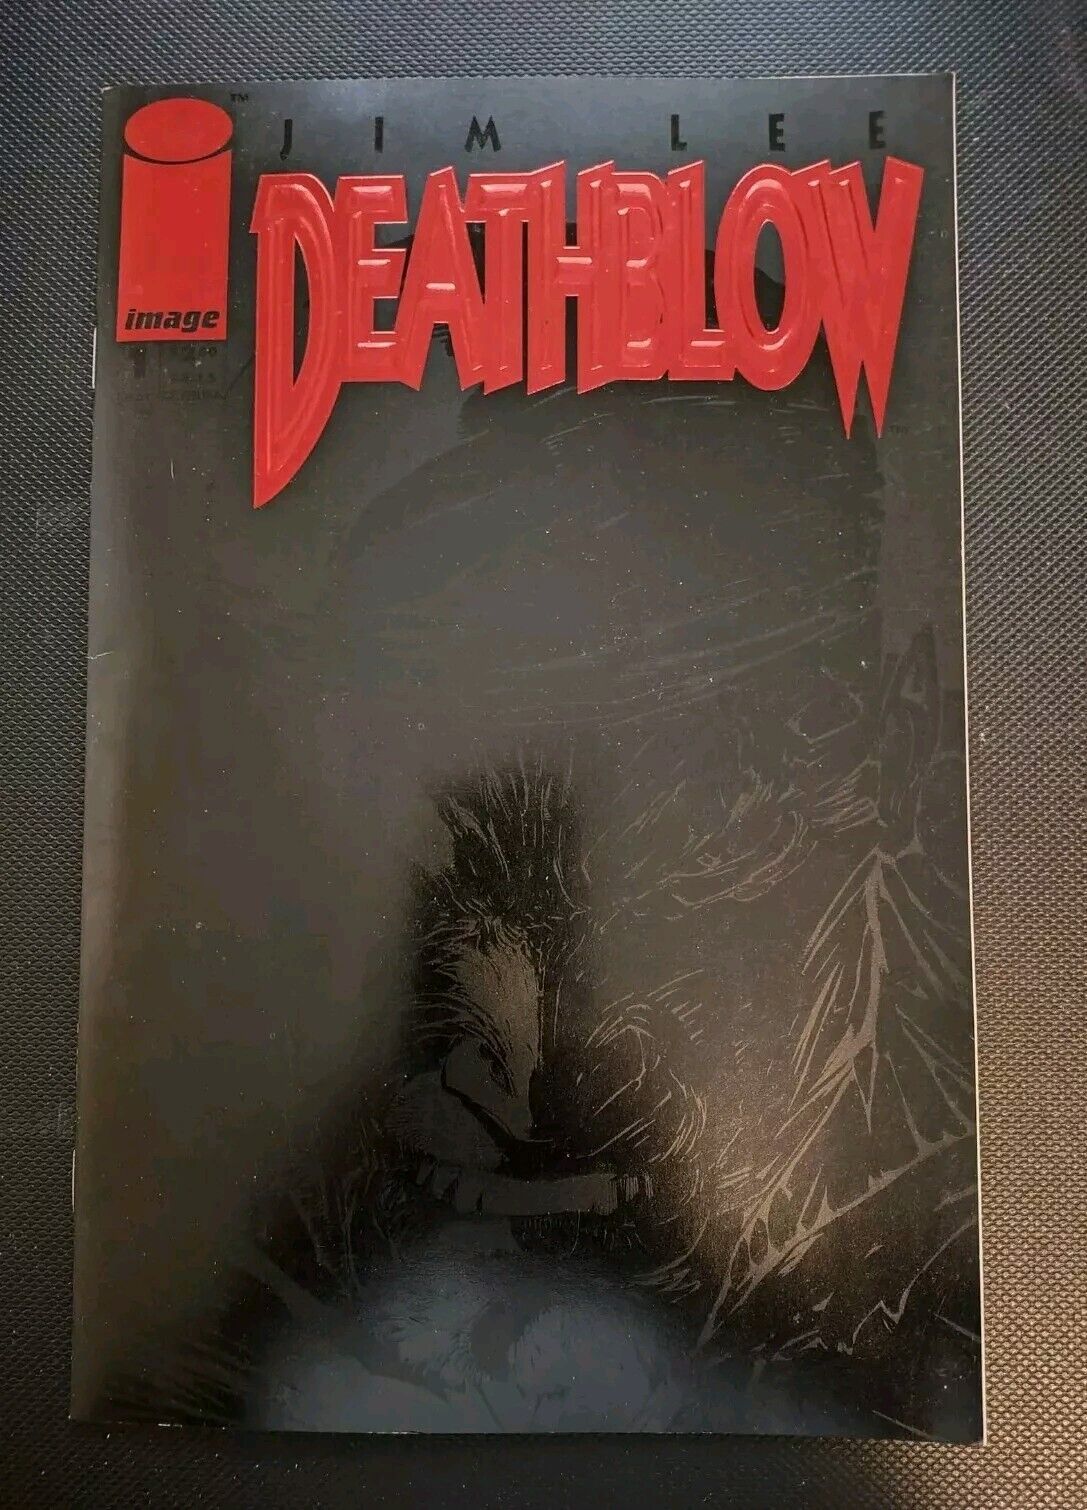 Deathblow #1 1993 image-comics Comic Book 